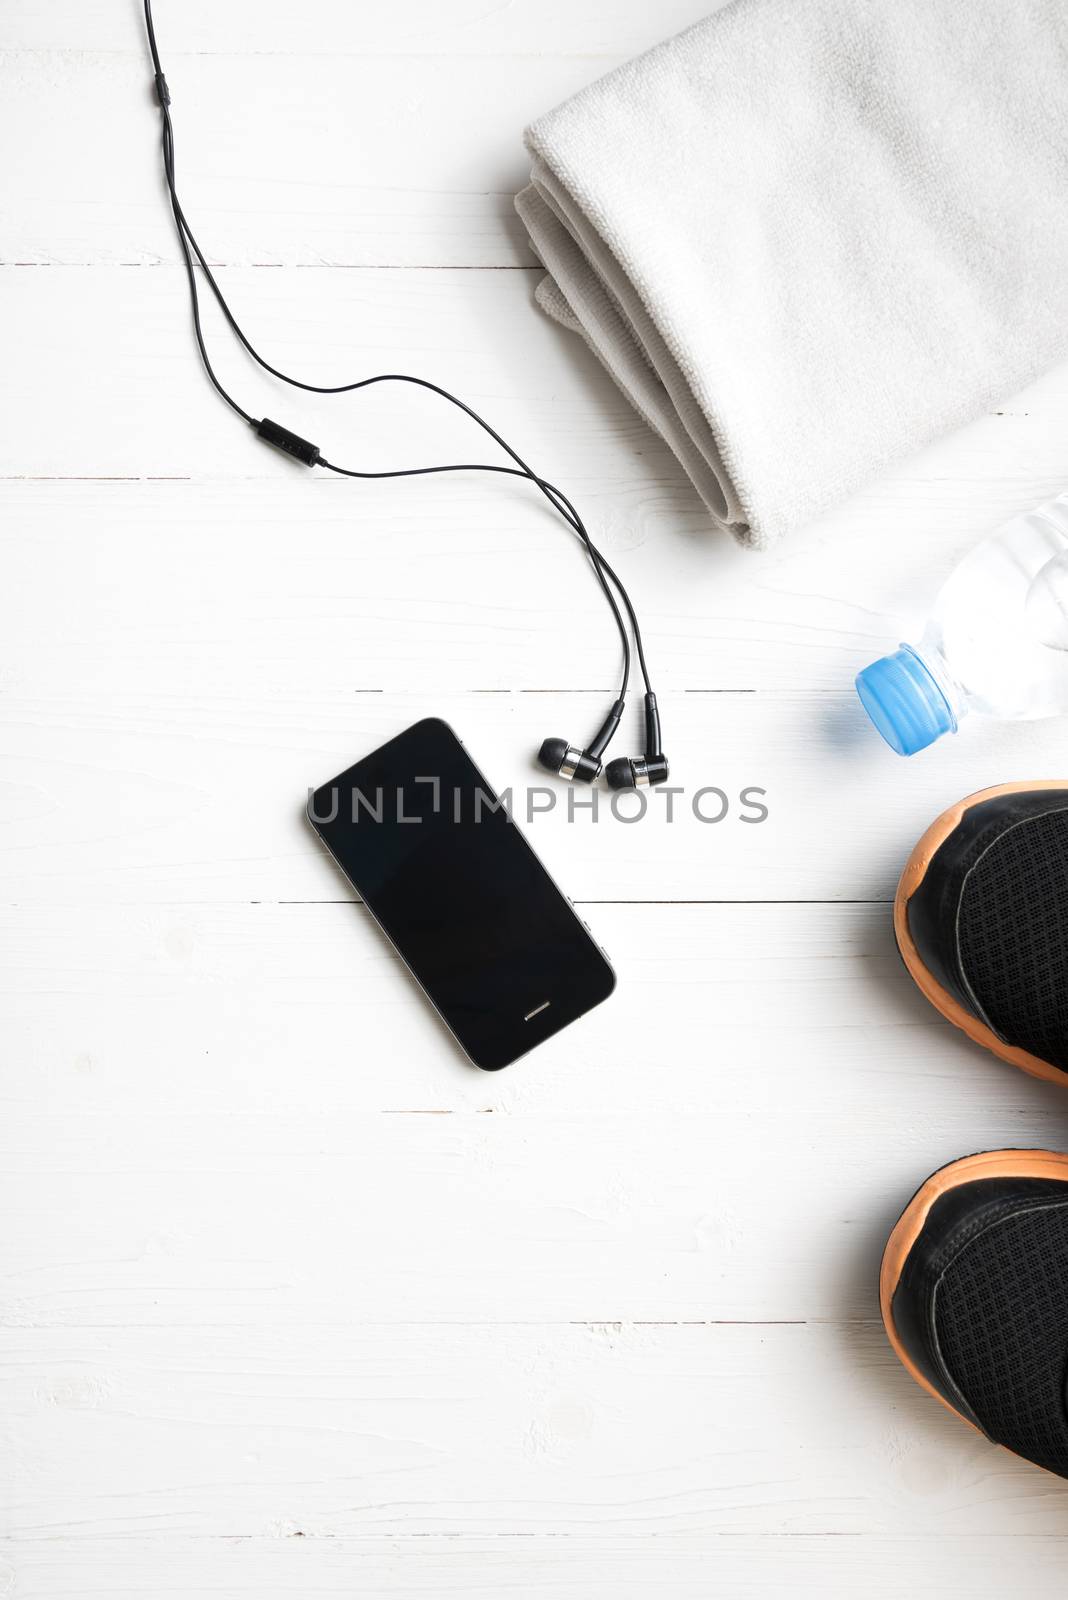 fitness equipment:running shoes,water bottle,towel,smart phone